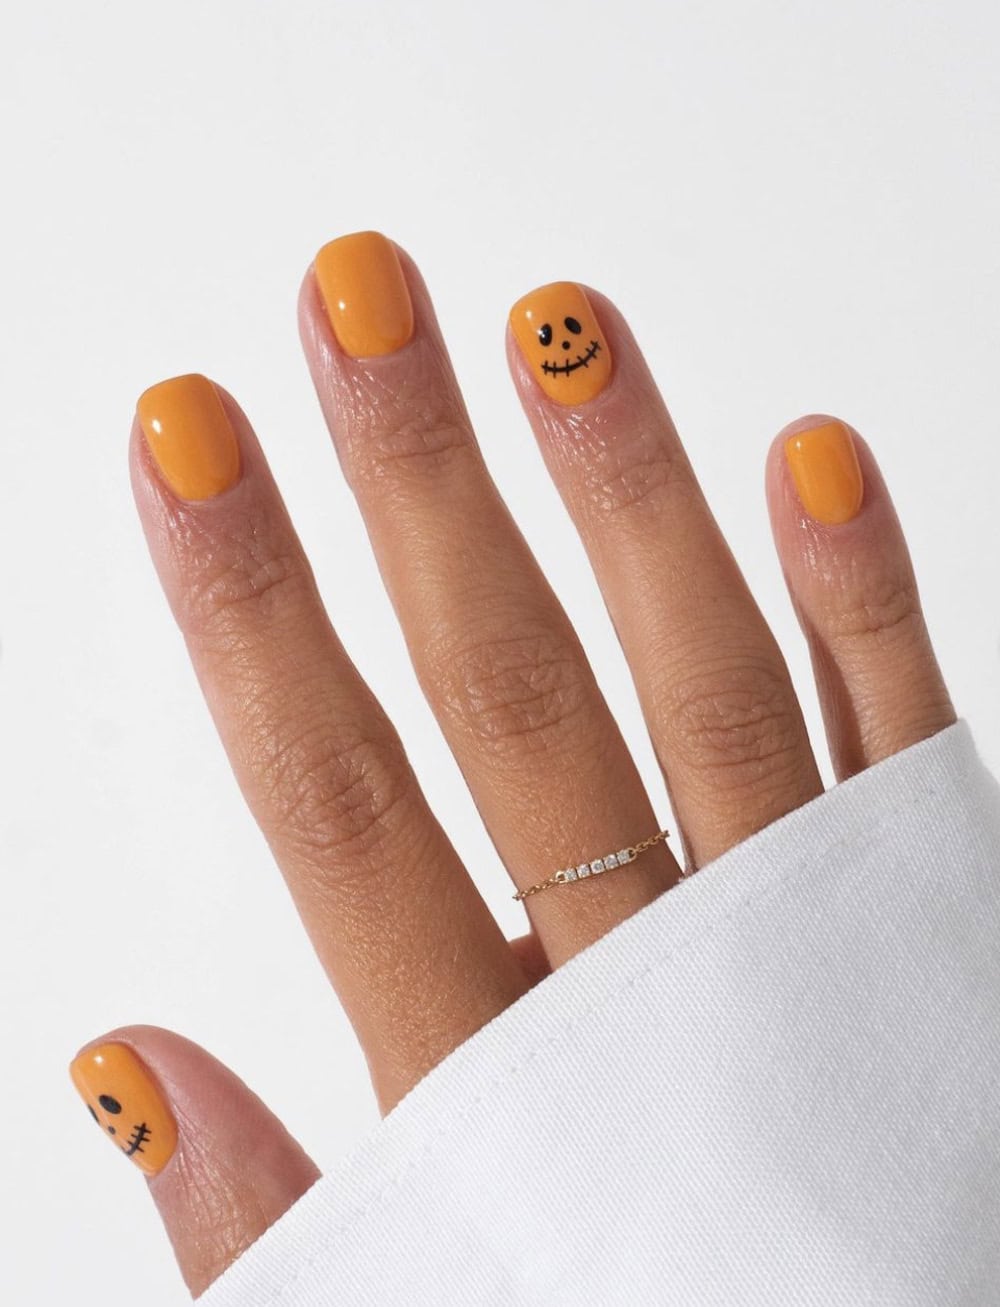 short orange nails with pumpkin face accent nails